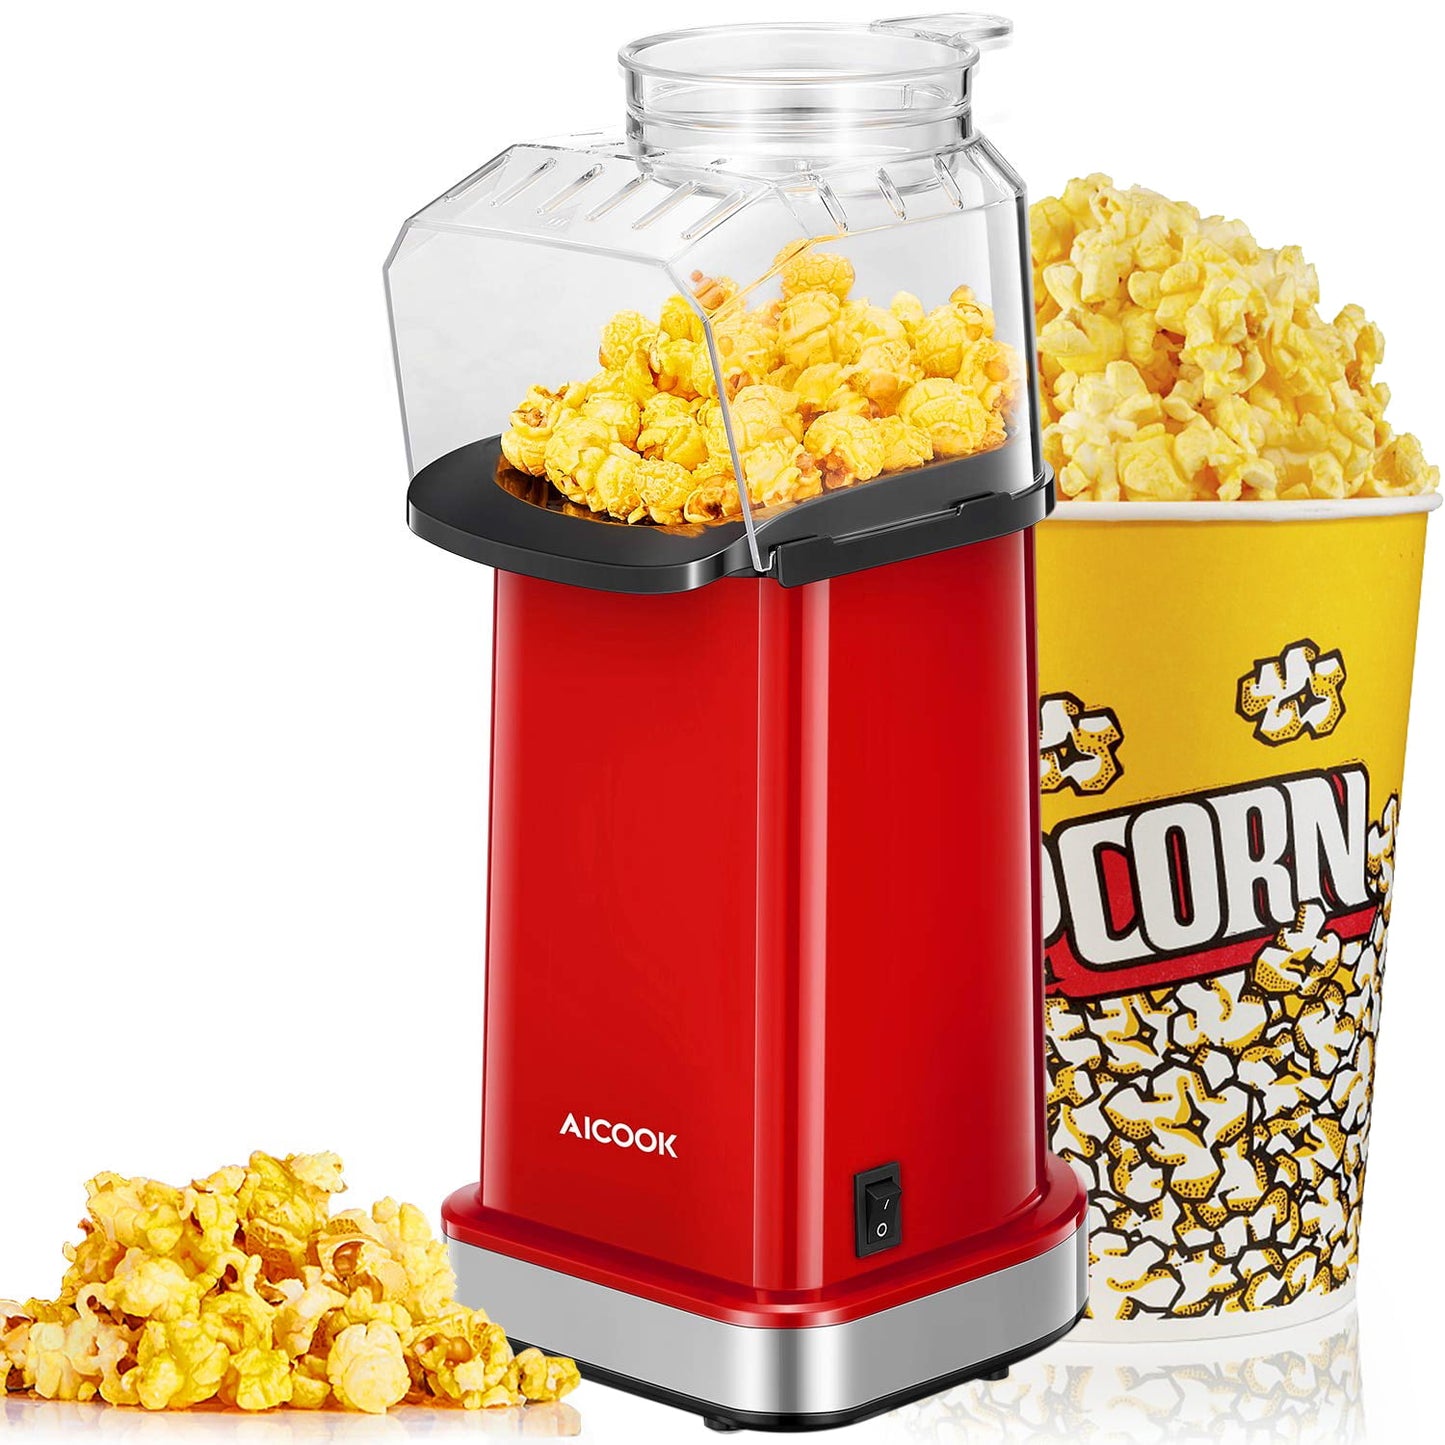 FOHERE 1400W Hot Air Popcorn Maker, 18 Cups/4.5 Quart, Popcorn